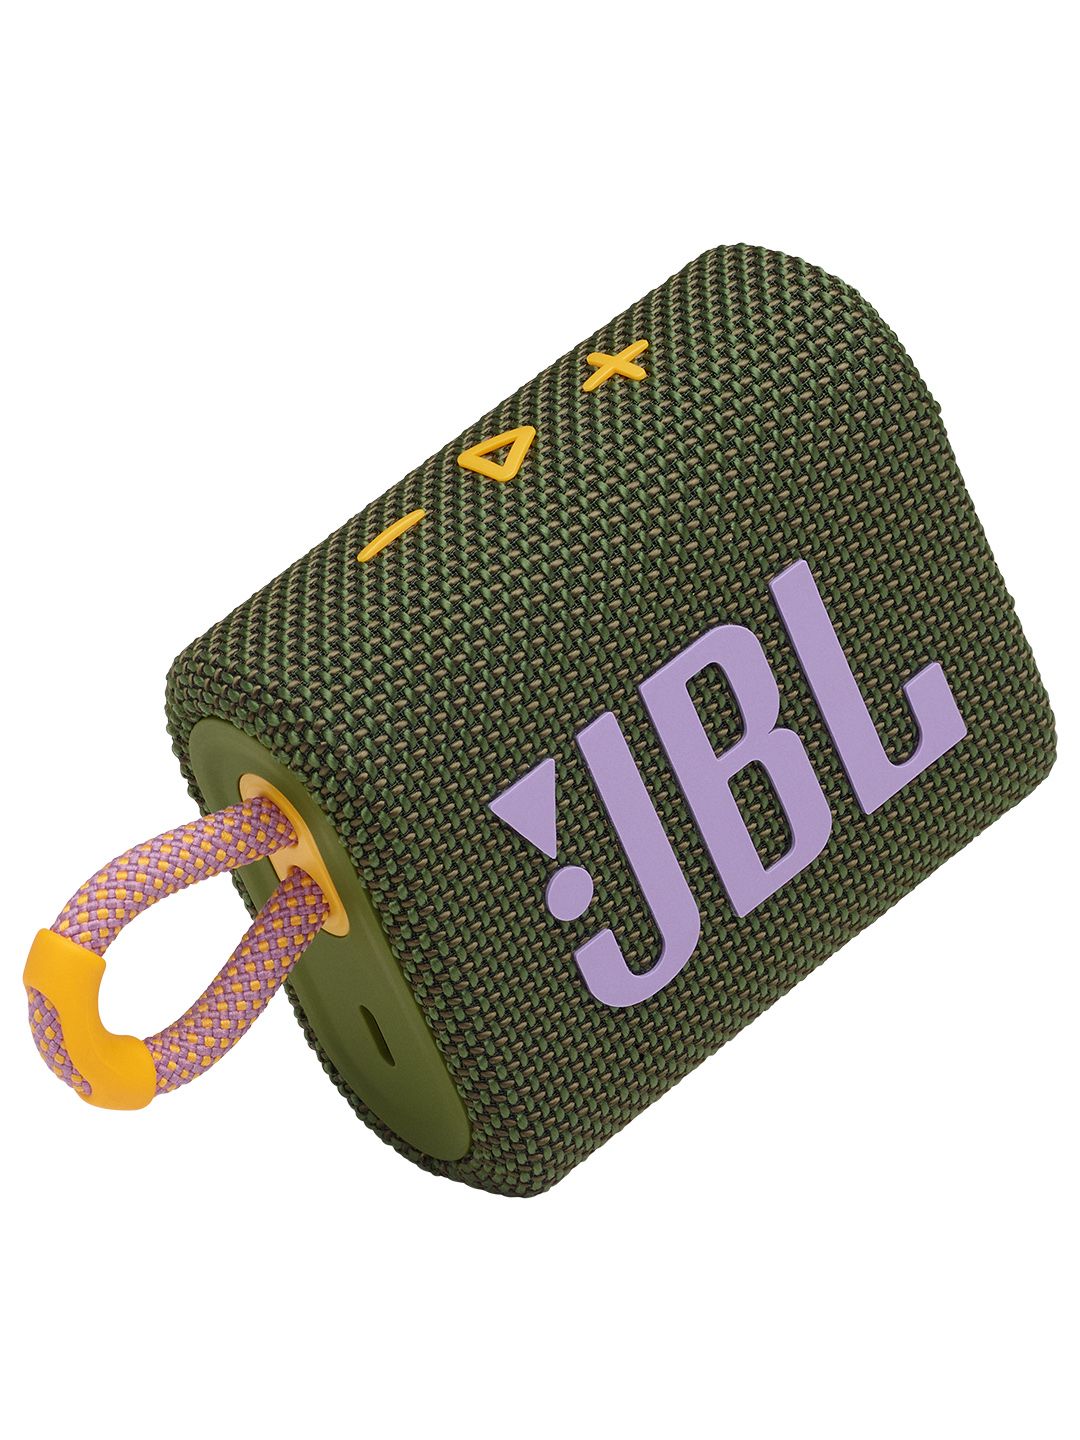 JBL GO3 by Harman Ultra Portable IP67 Water & Dustproof Bluetooth Speaker - Green Price in India